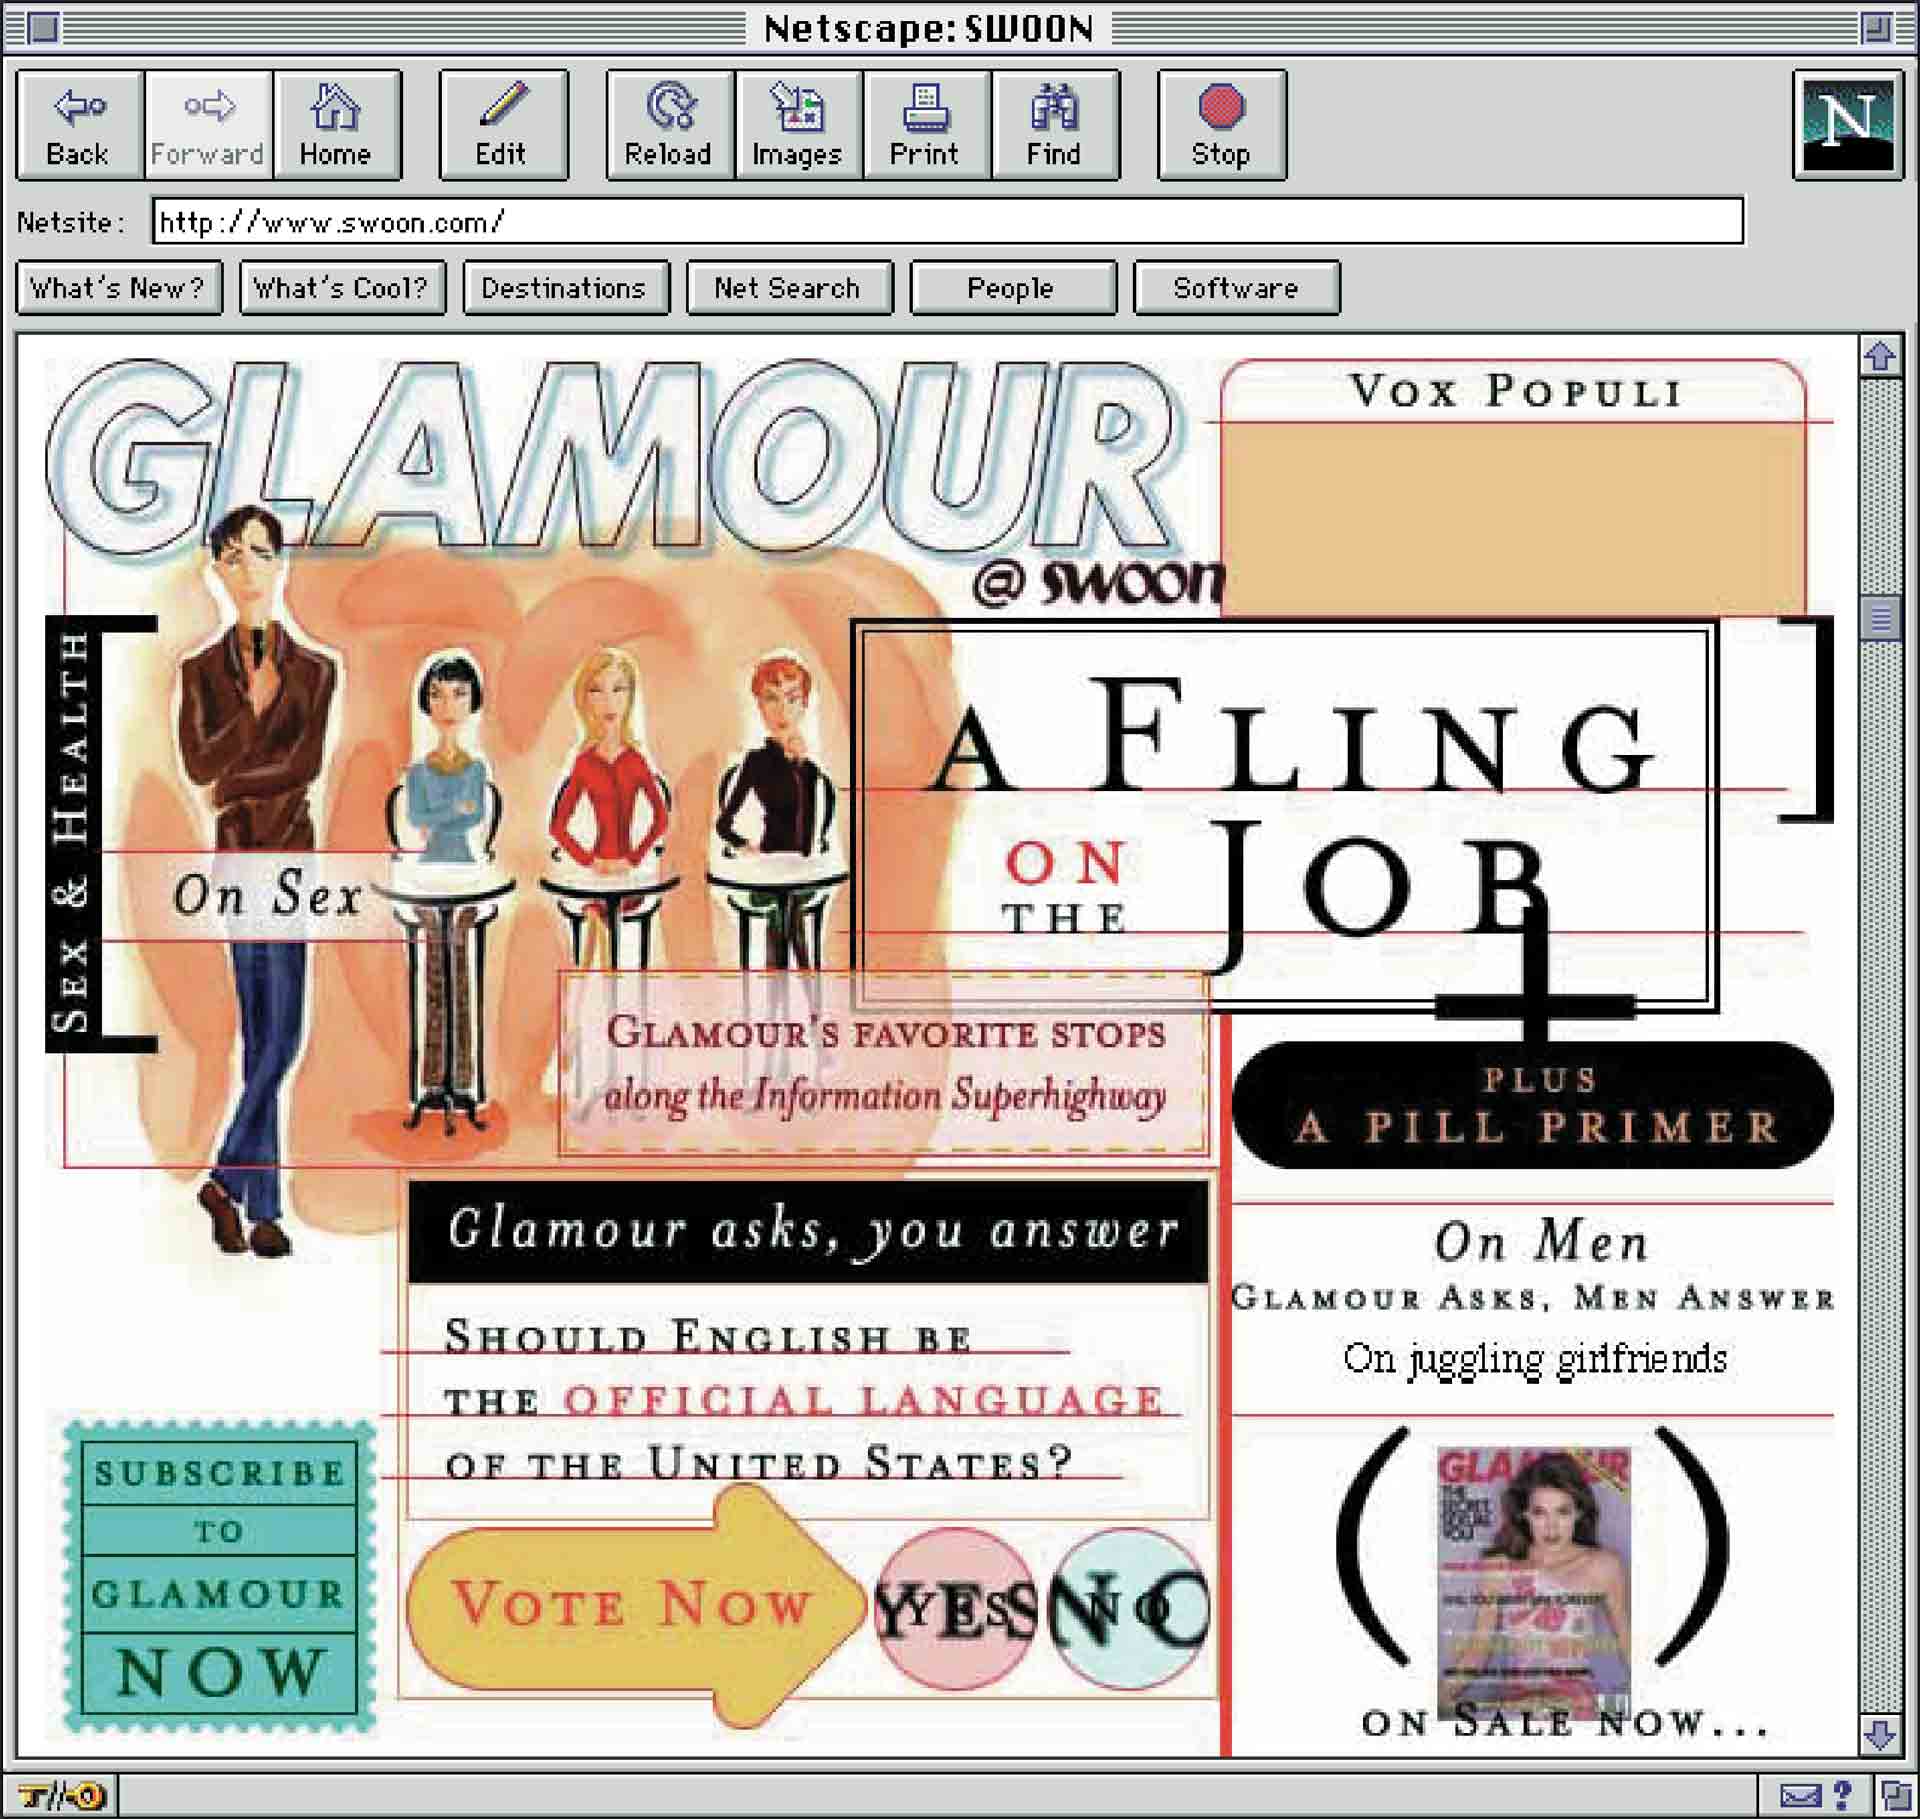 Glamour Magazine @ Swoon